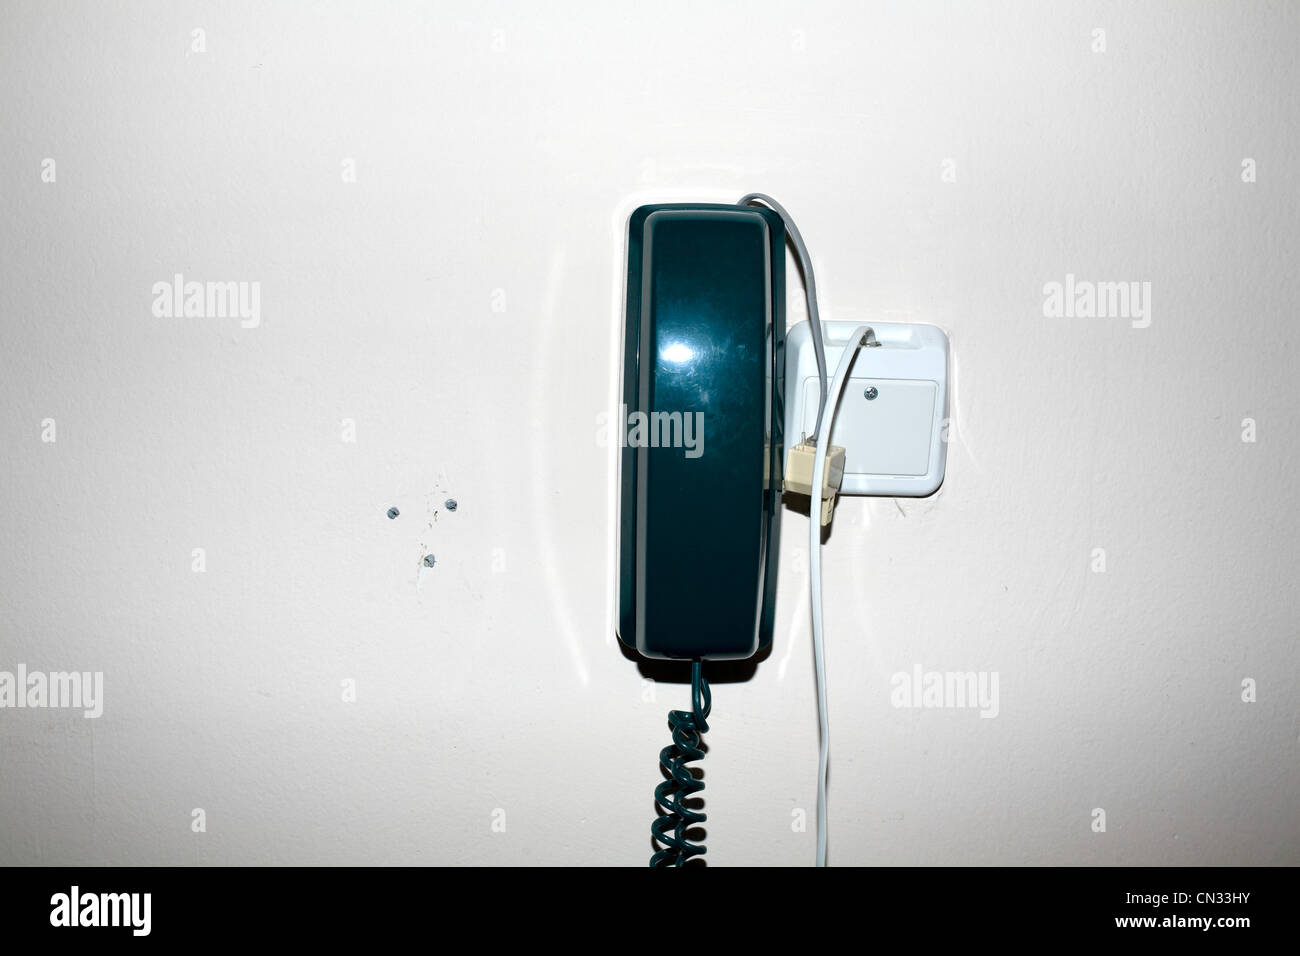 Landline phone on wall Stock Photo